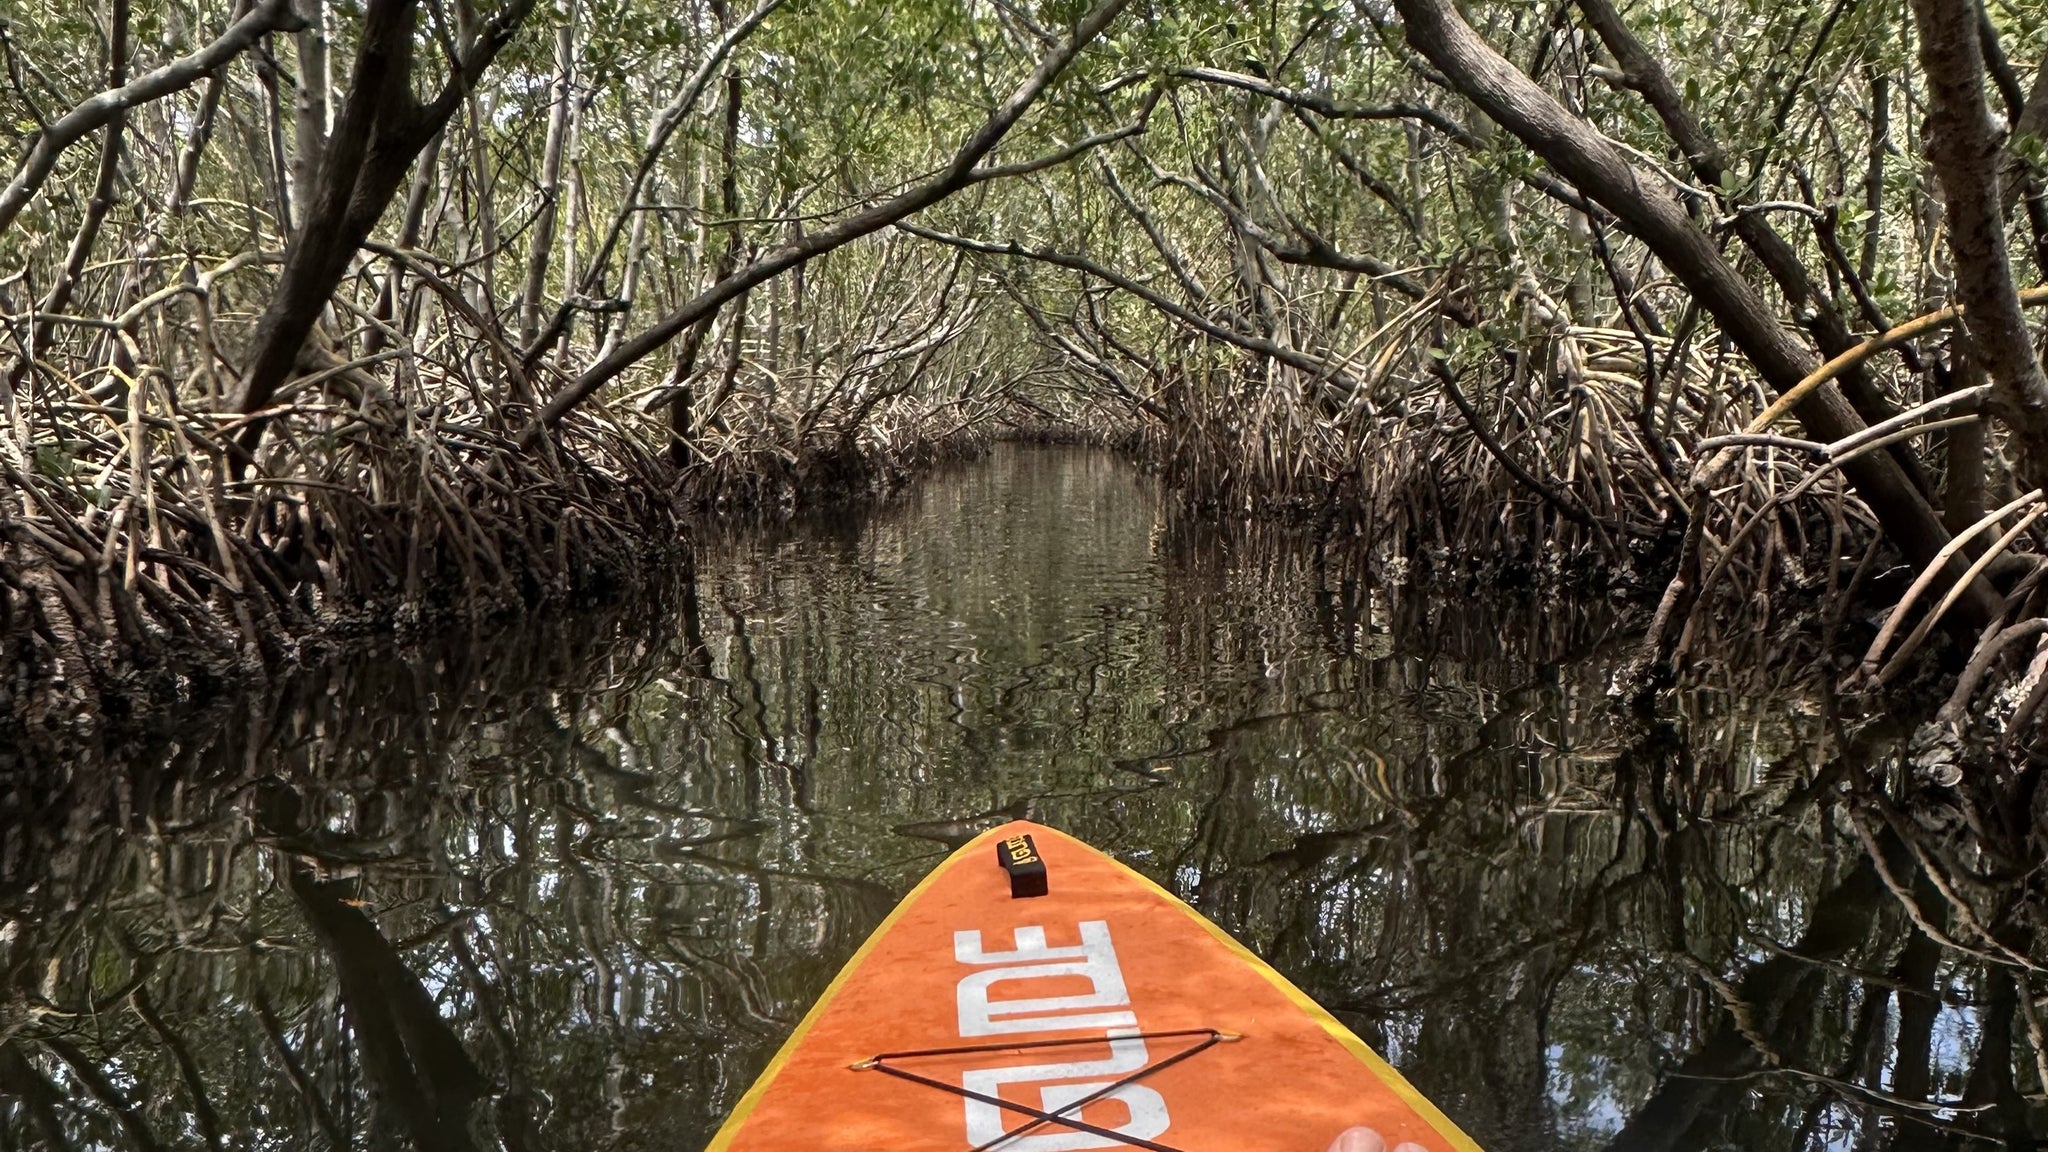 Paddle Boarding Through a Mangrove Labyrinth